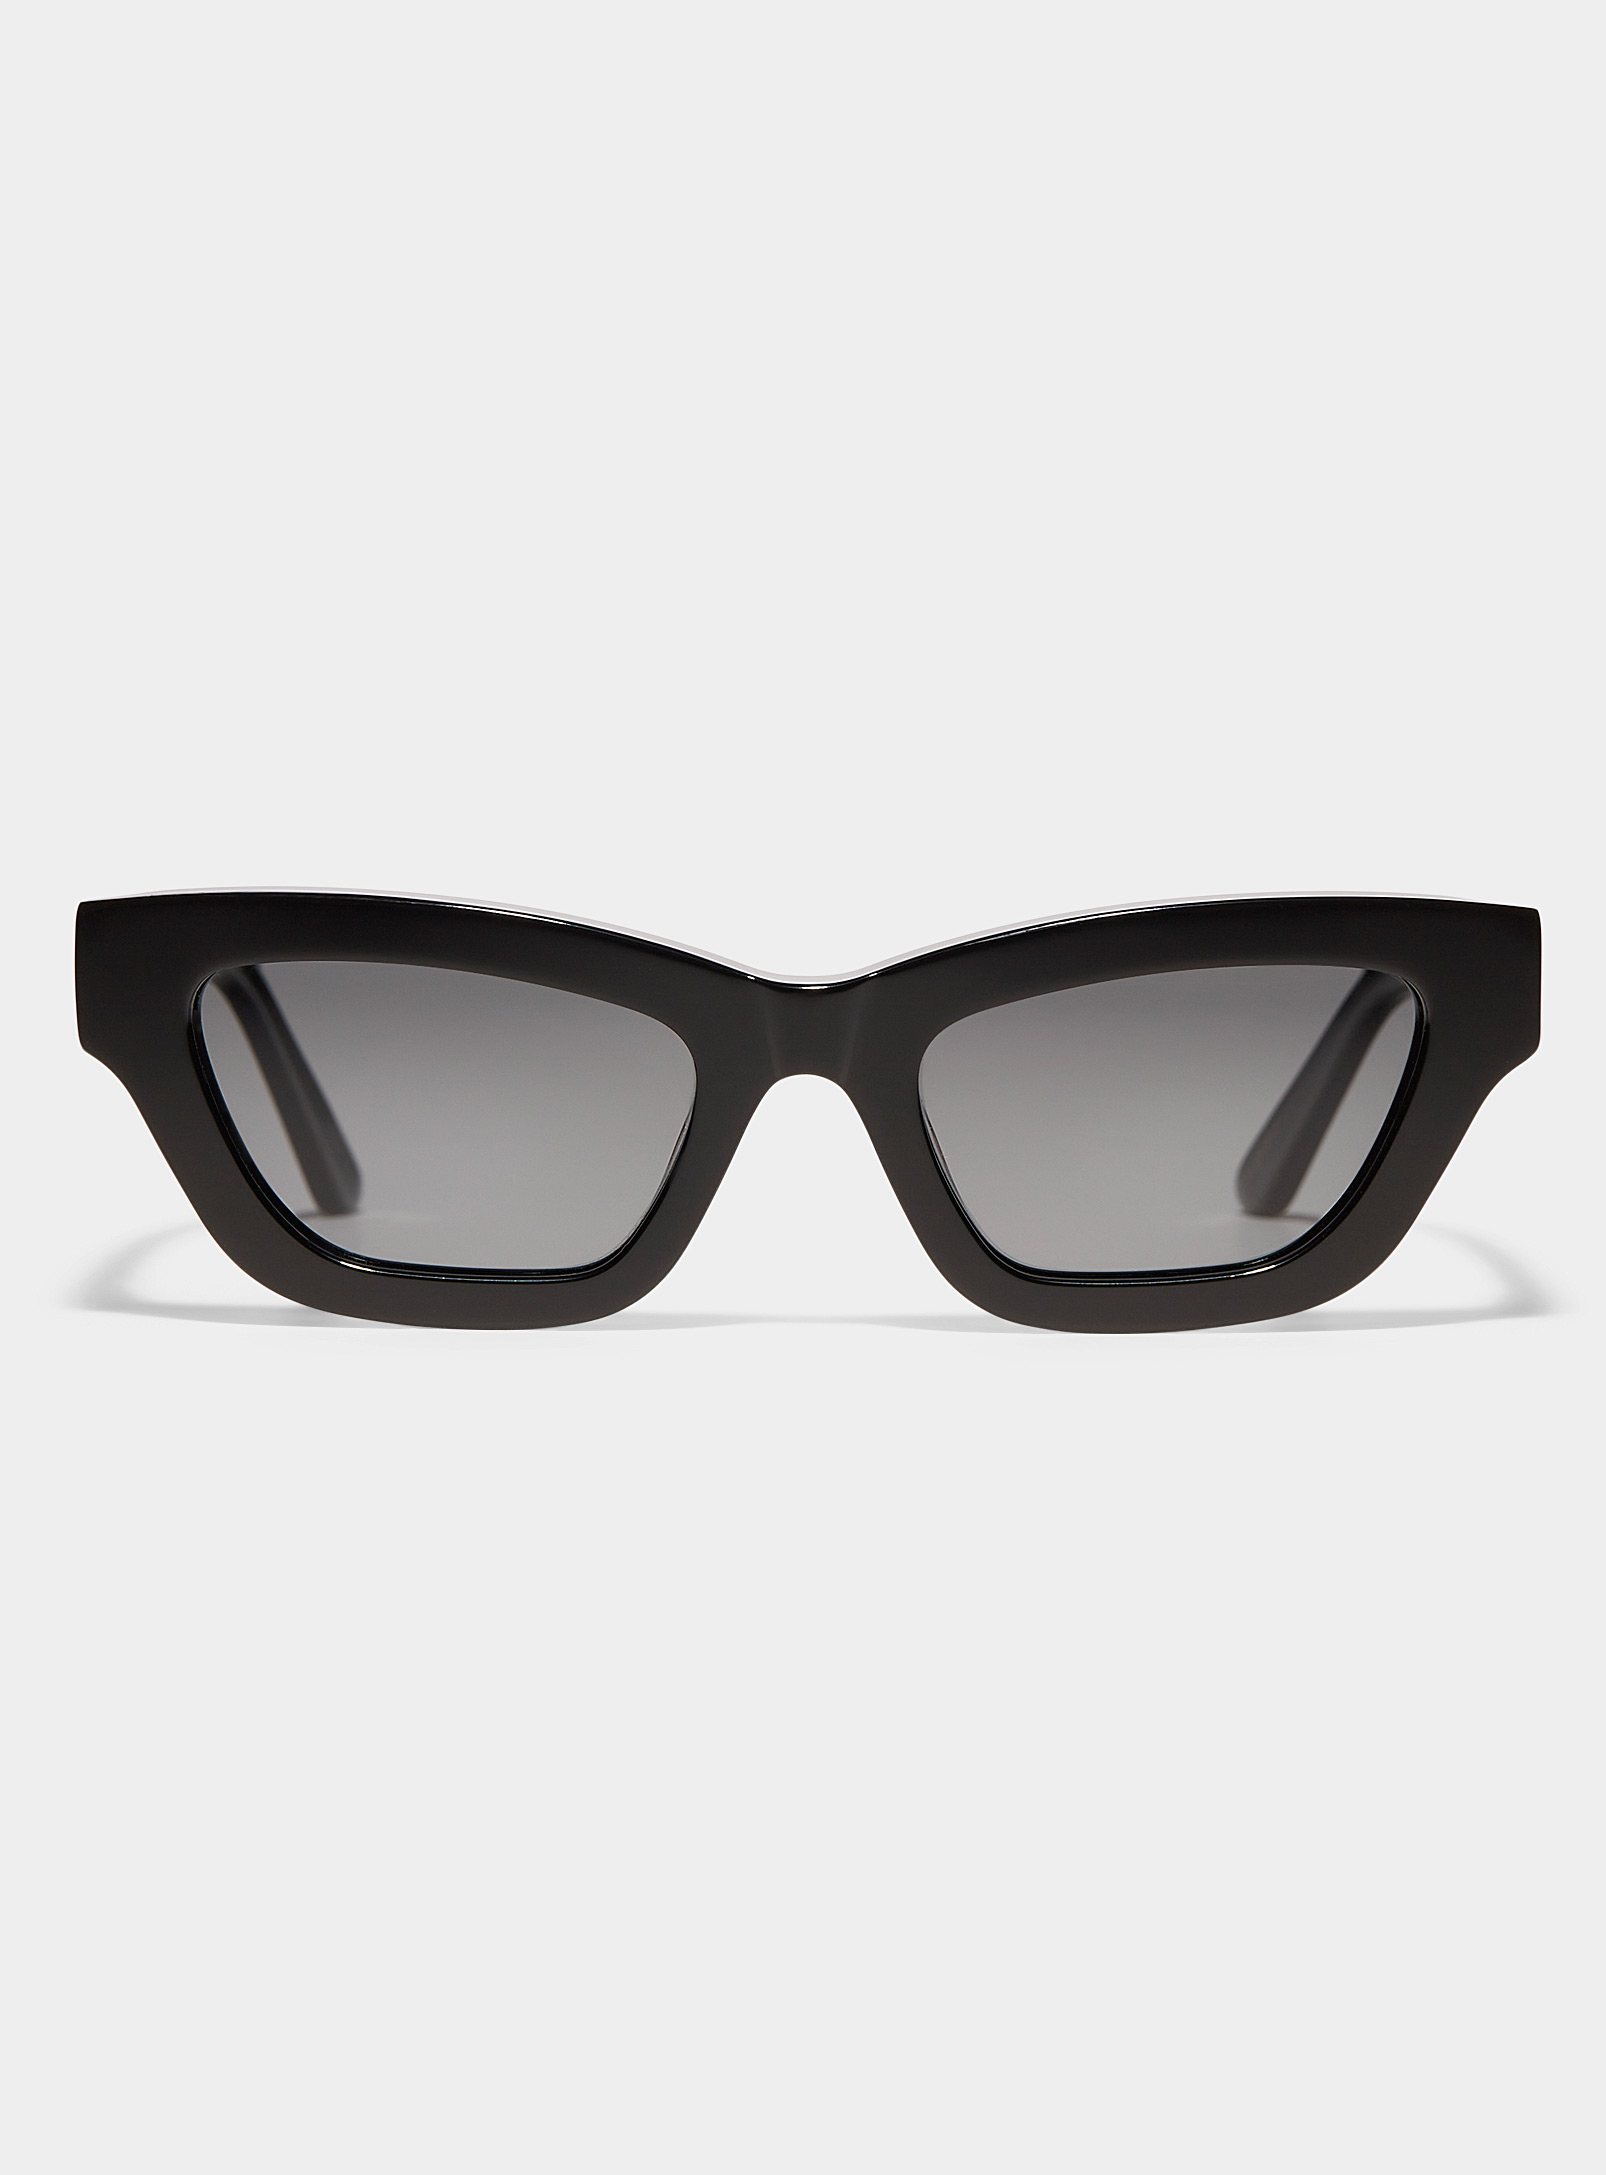 French Kiwis Jade Rectangular Cat-eye Sunglasses In Black